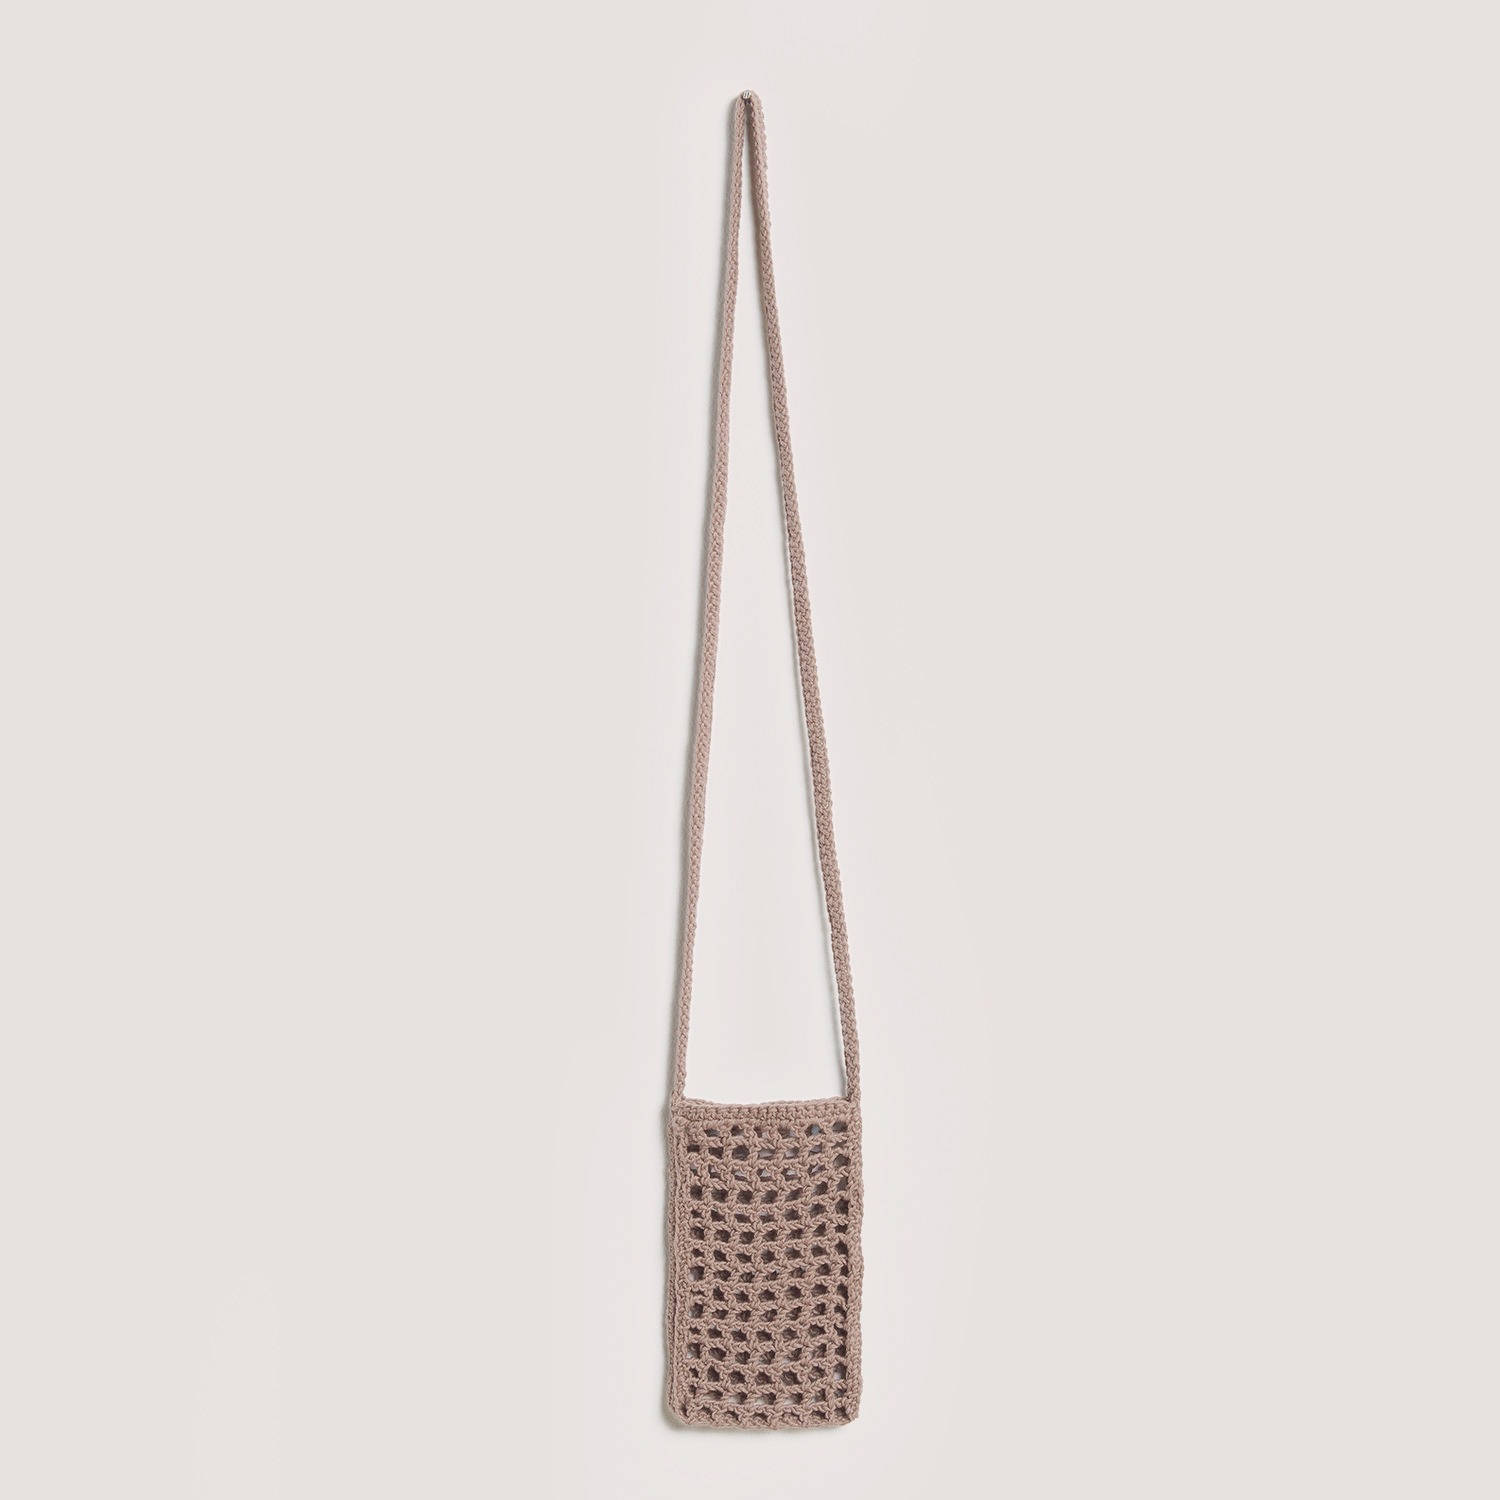 Häkelset kleine Netztasche Modell 03 aus Boho Crochet